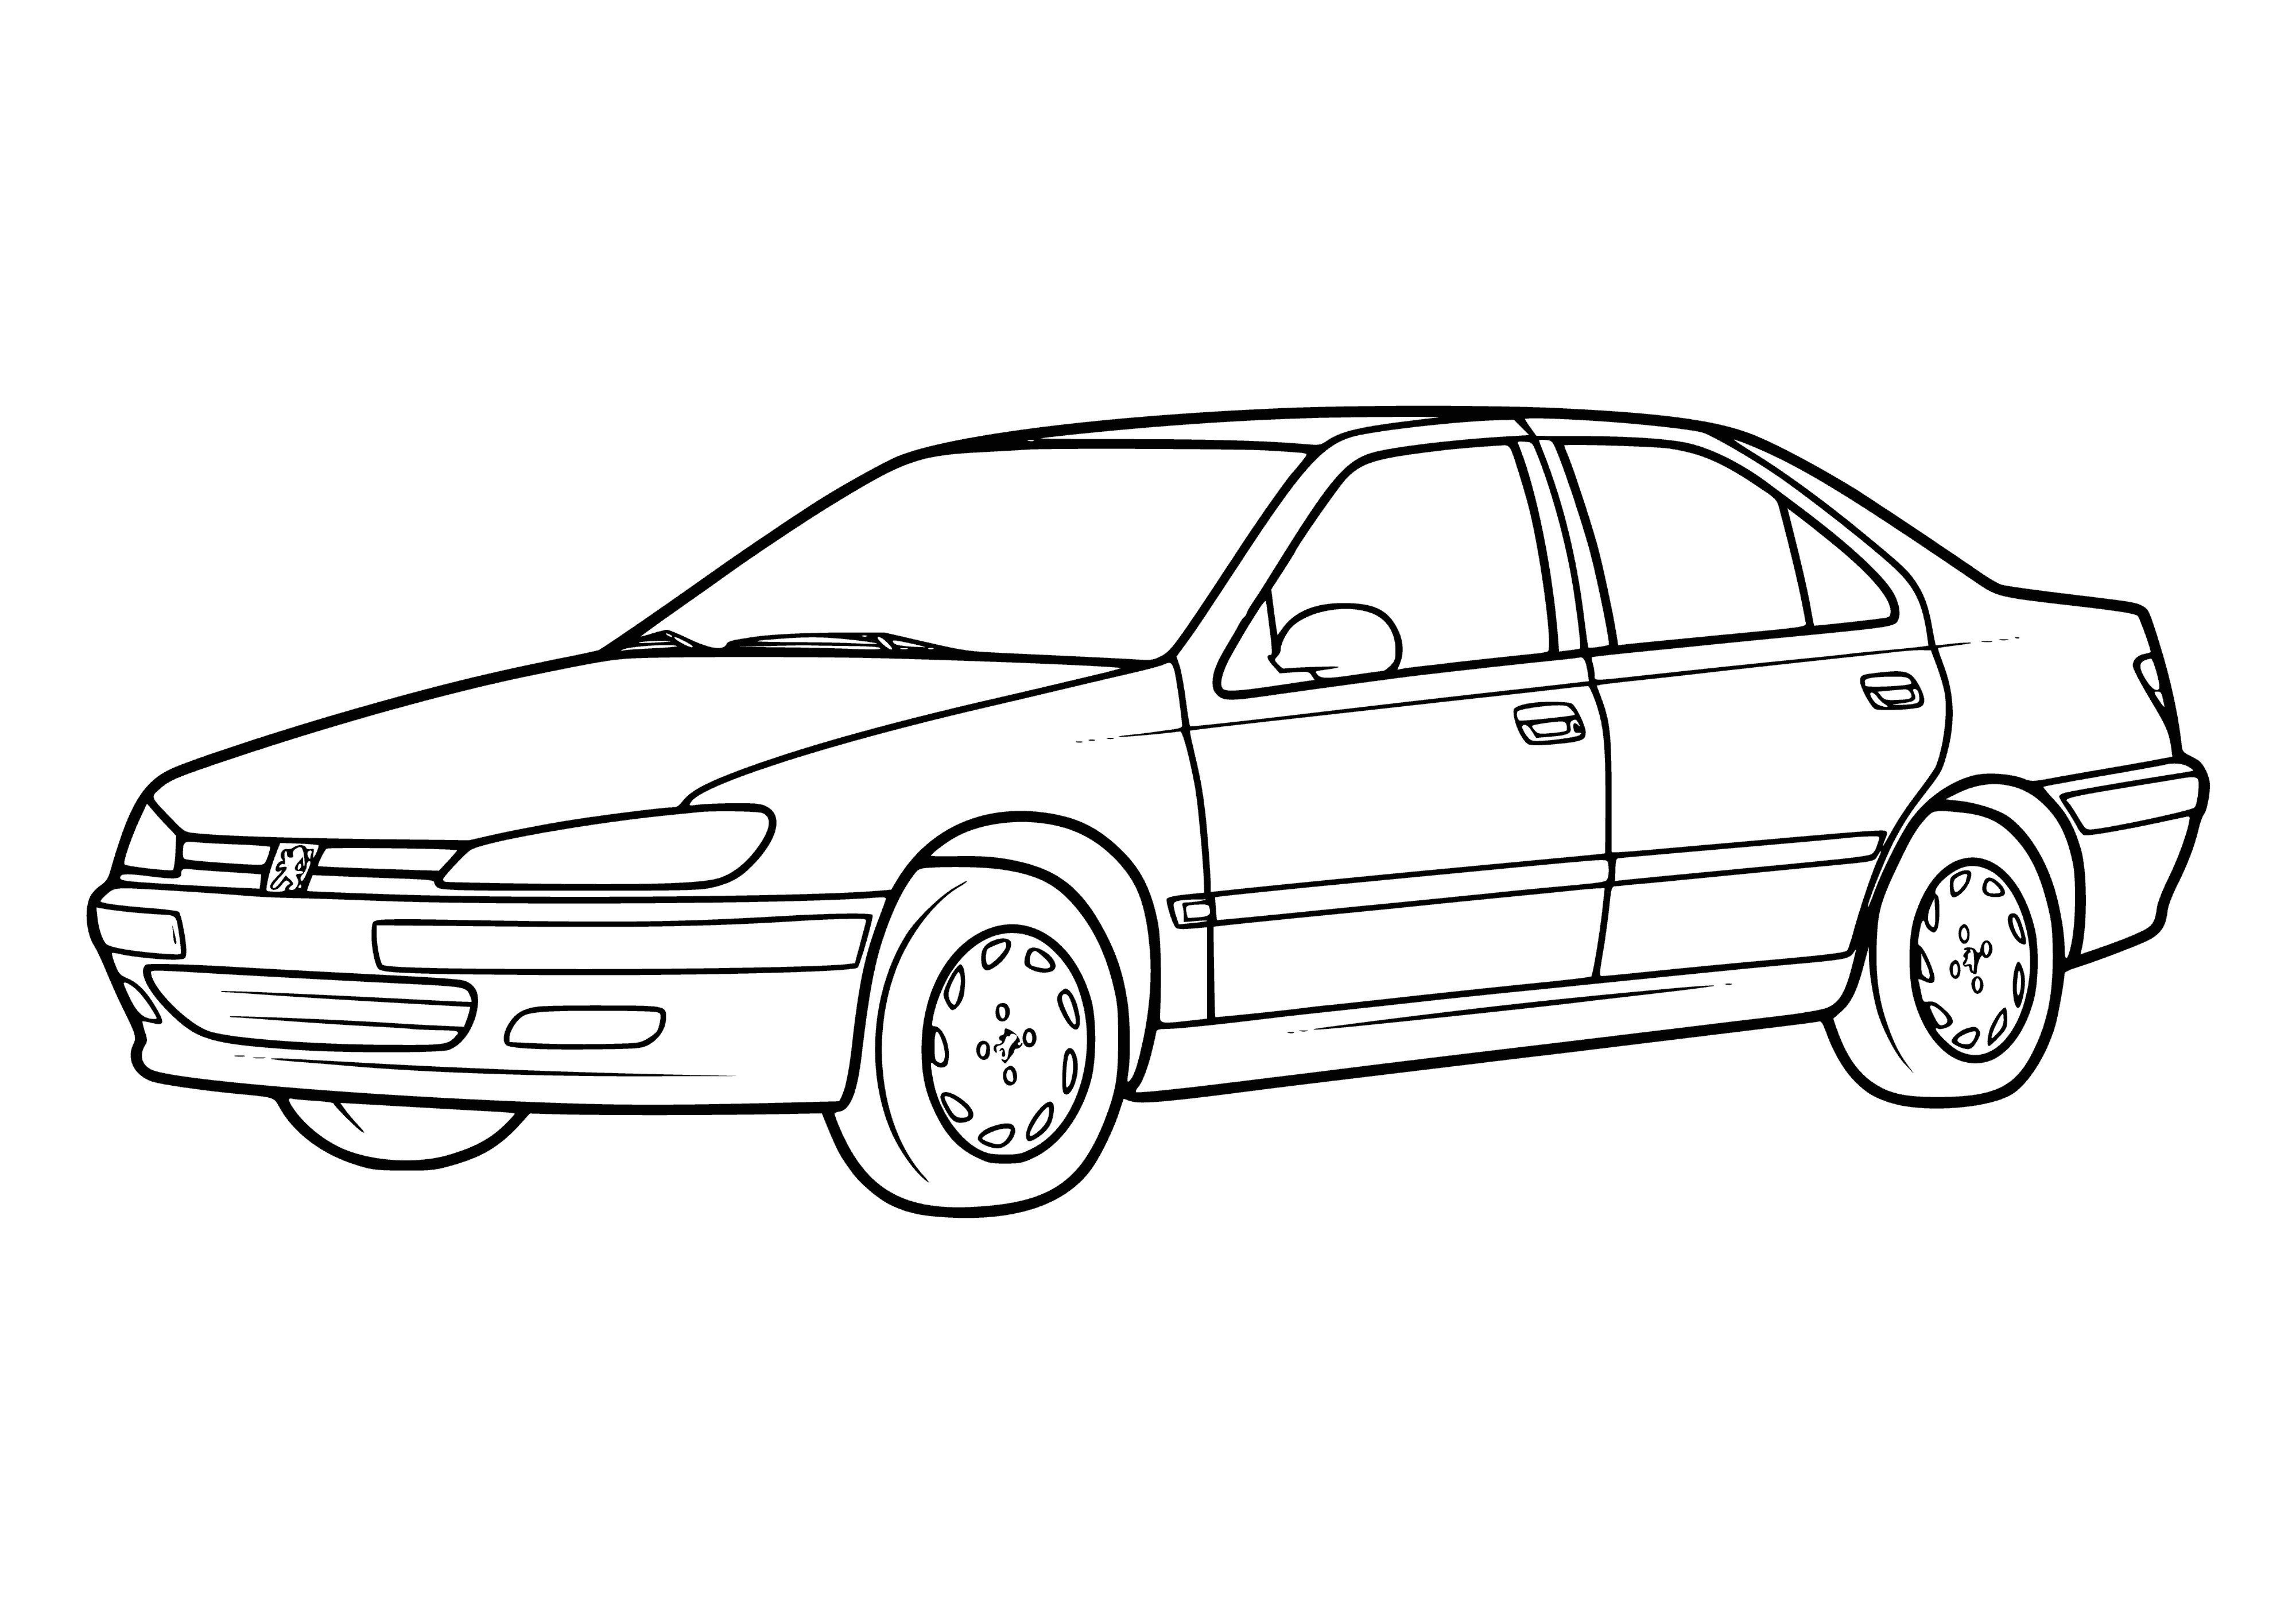 Peugeot car coloring page